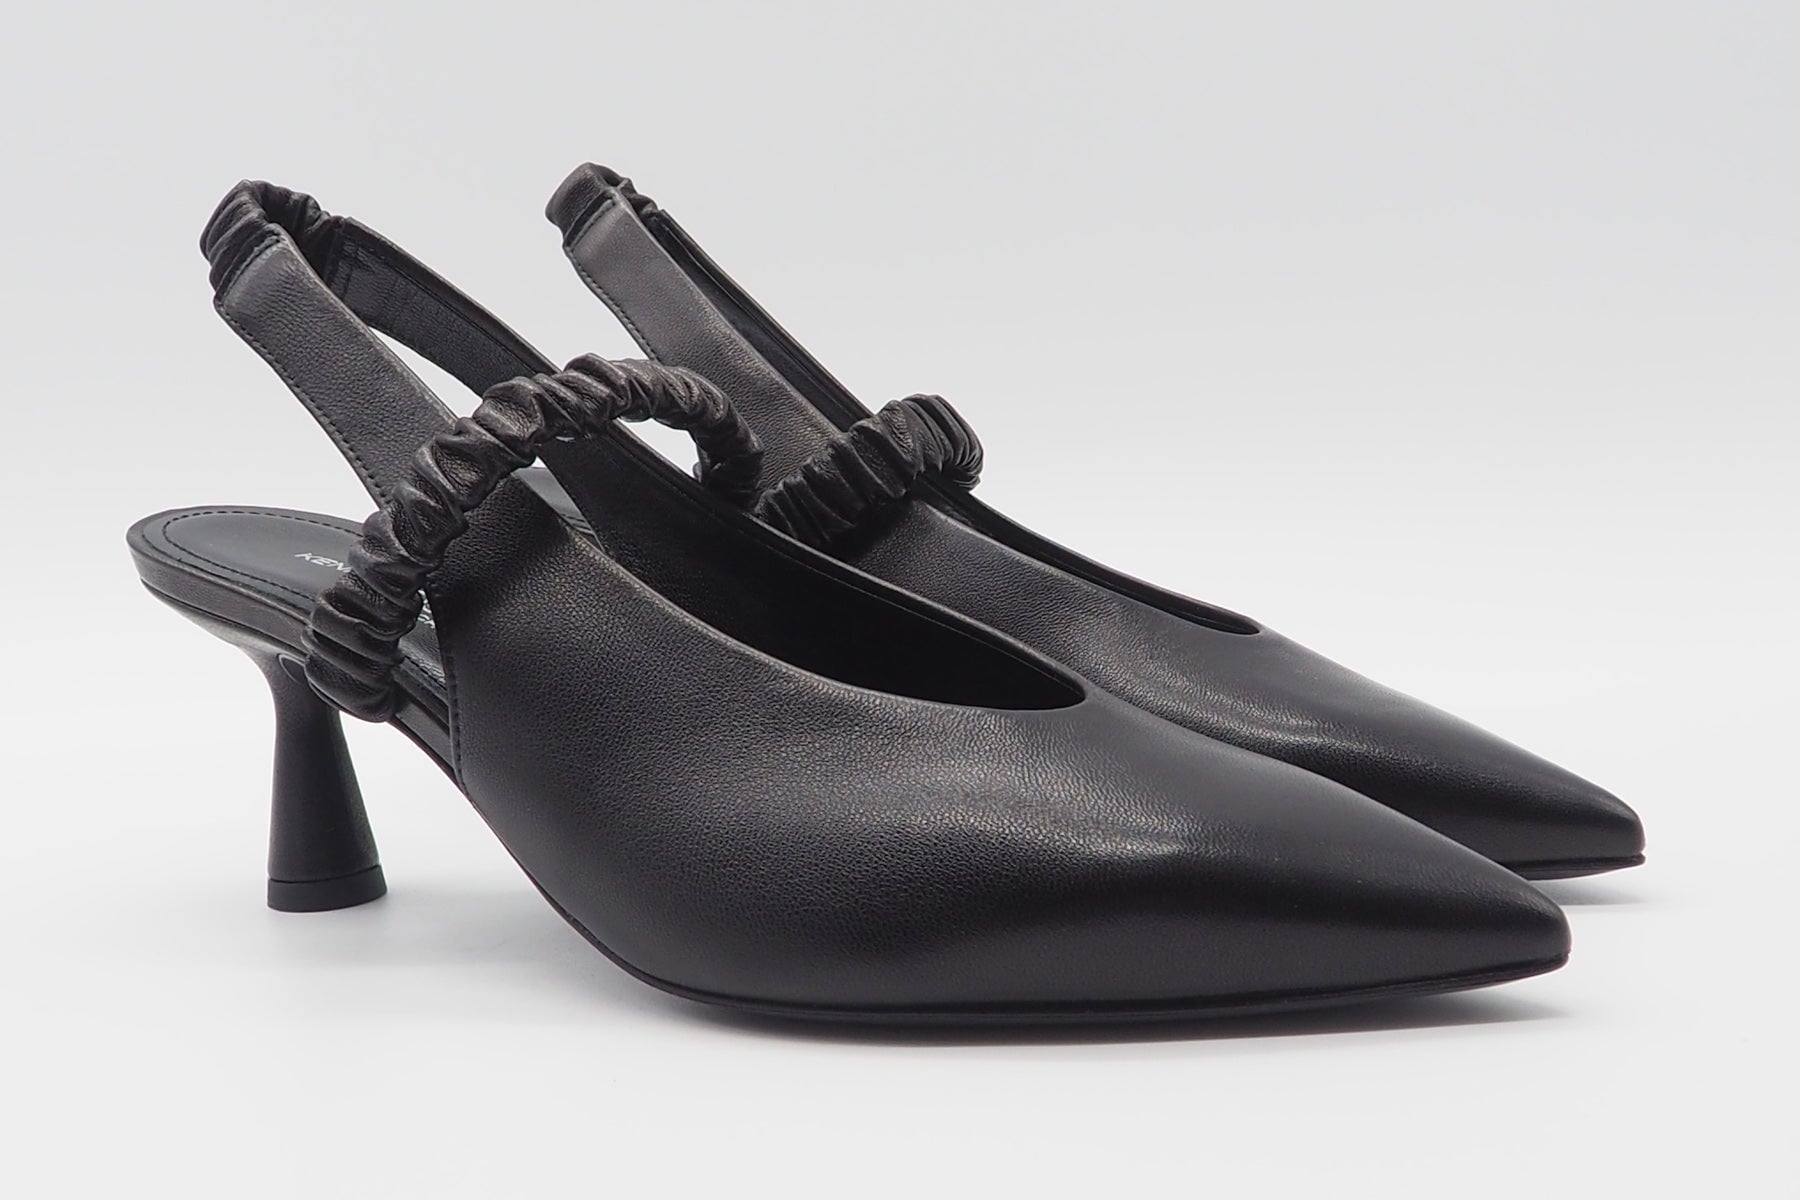 Damen Sling aus Glattleder in Schwarz mit Lederristband - Absatz 6cm Damen Pumps & Slings Kennel & Schmenger 